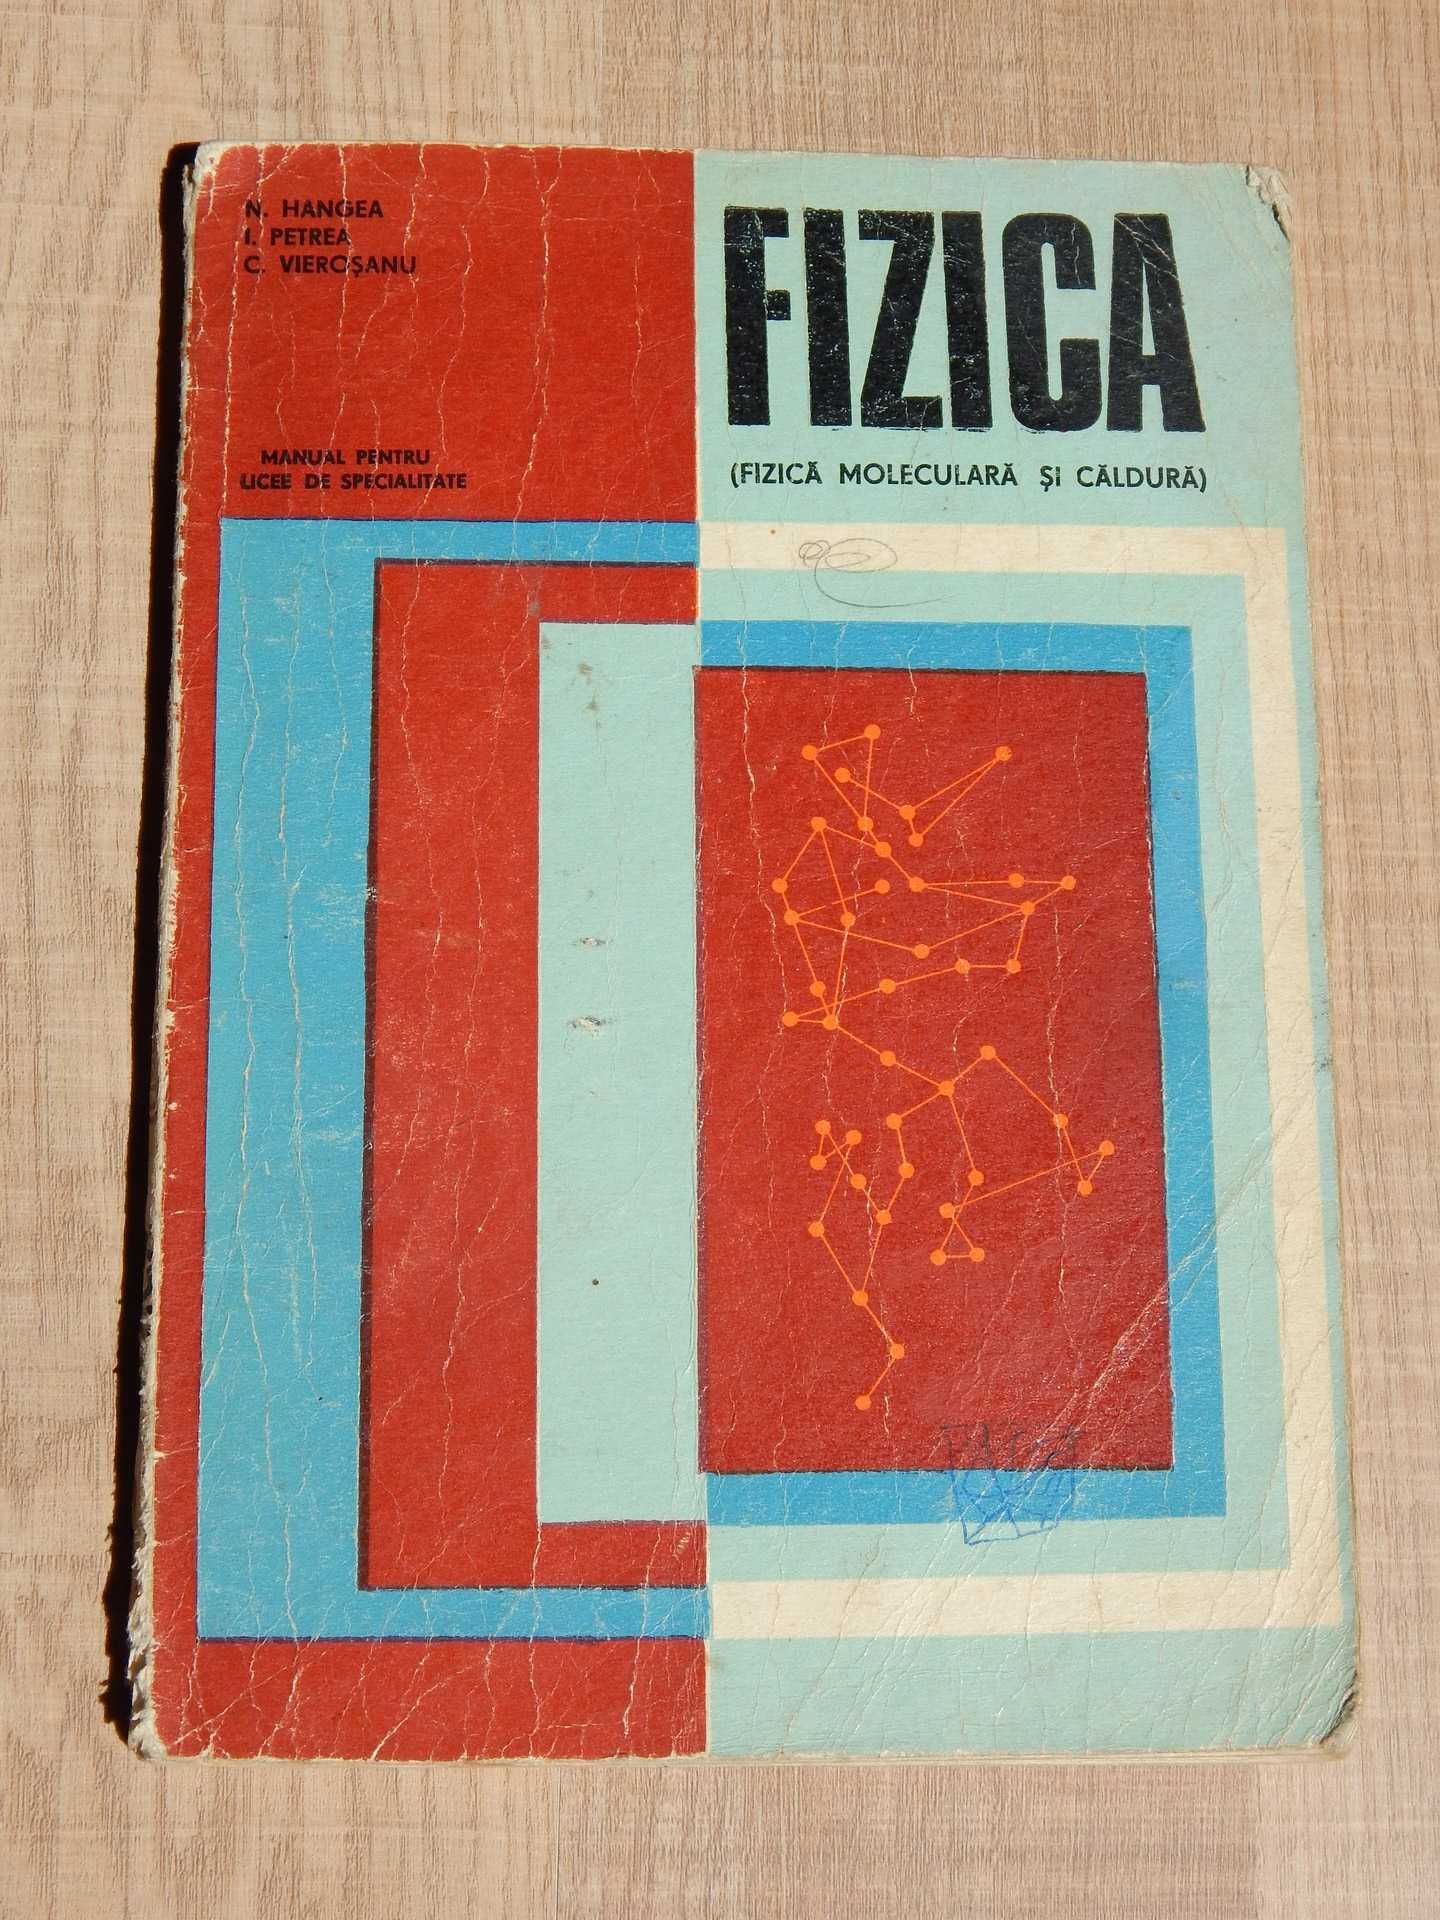 Manual fizica moleculara si caldura N Hangea I Petrea C Vierosanu 1975